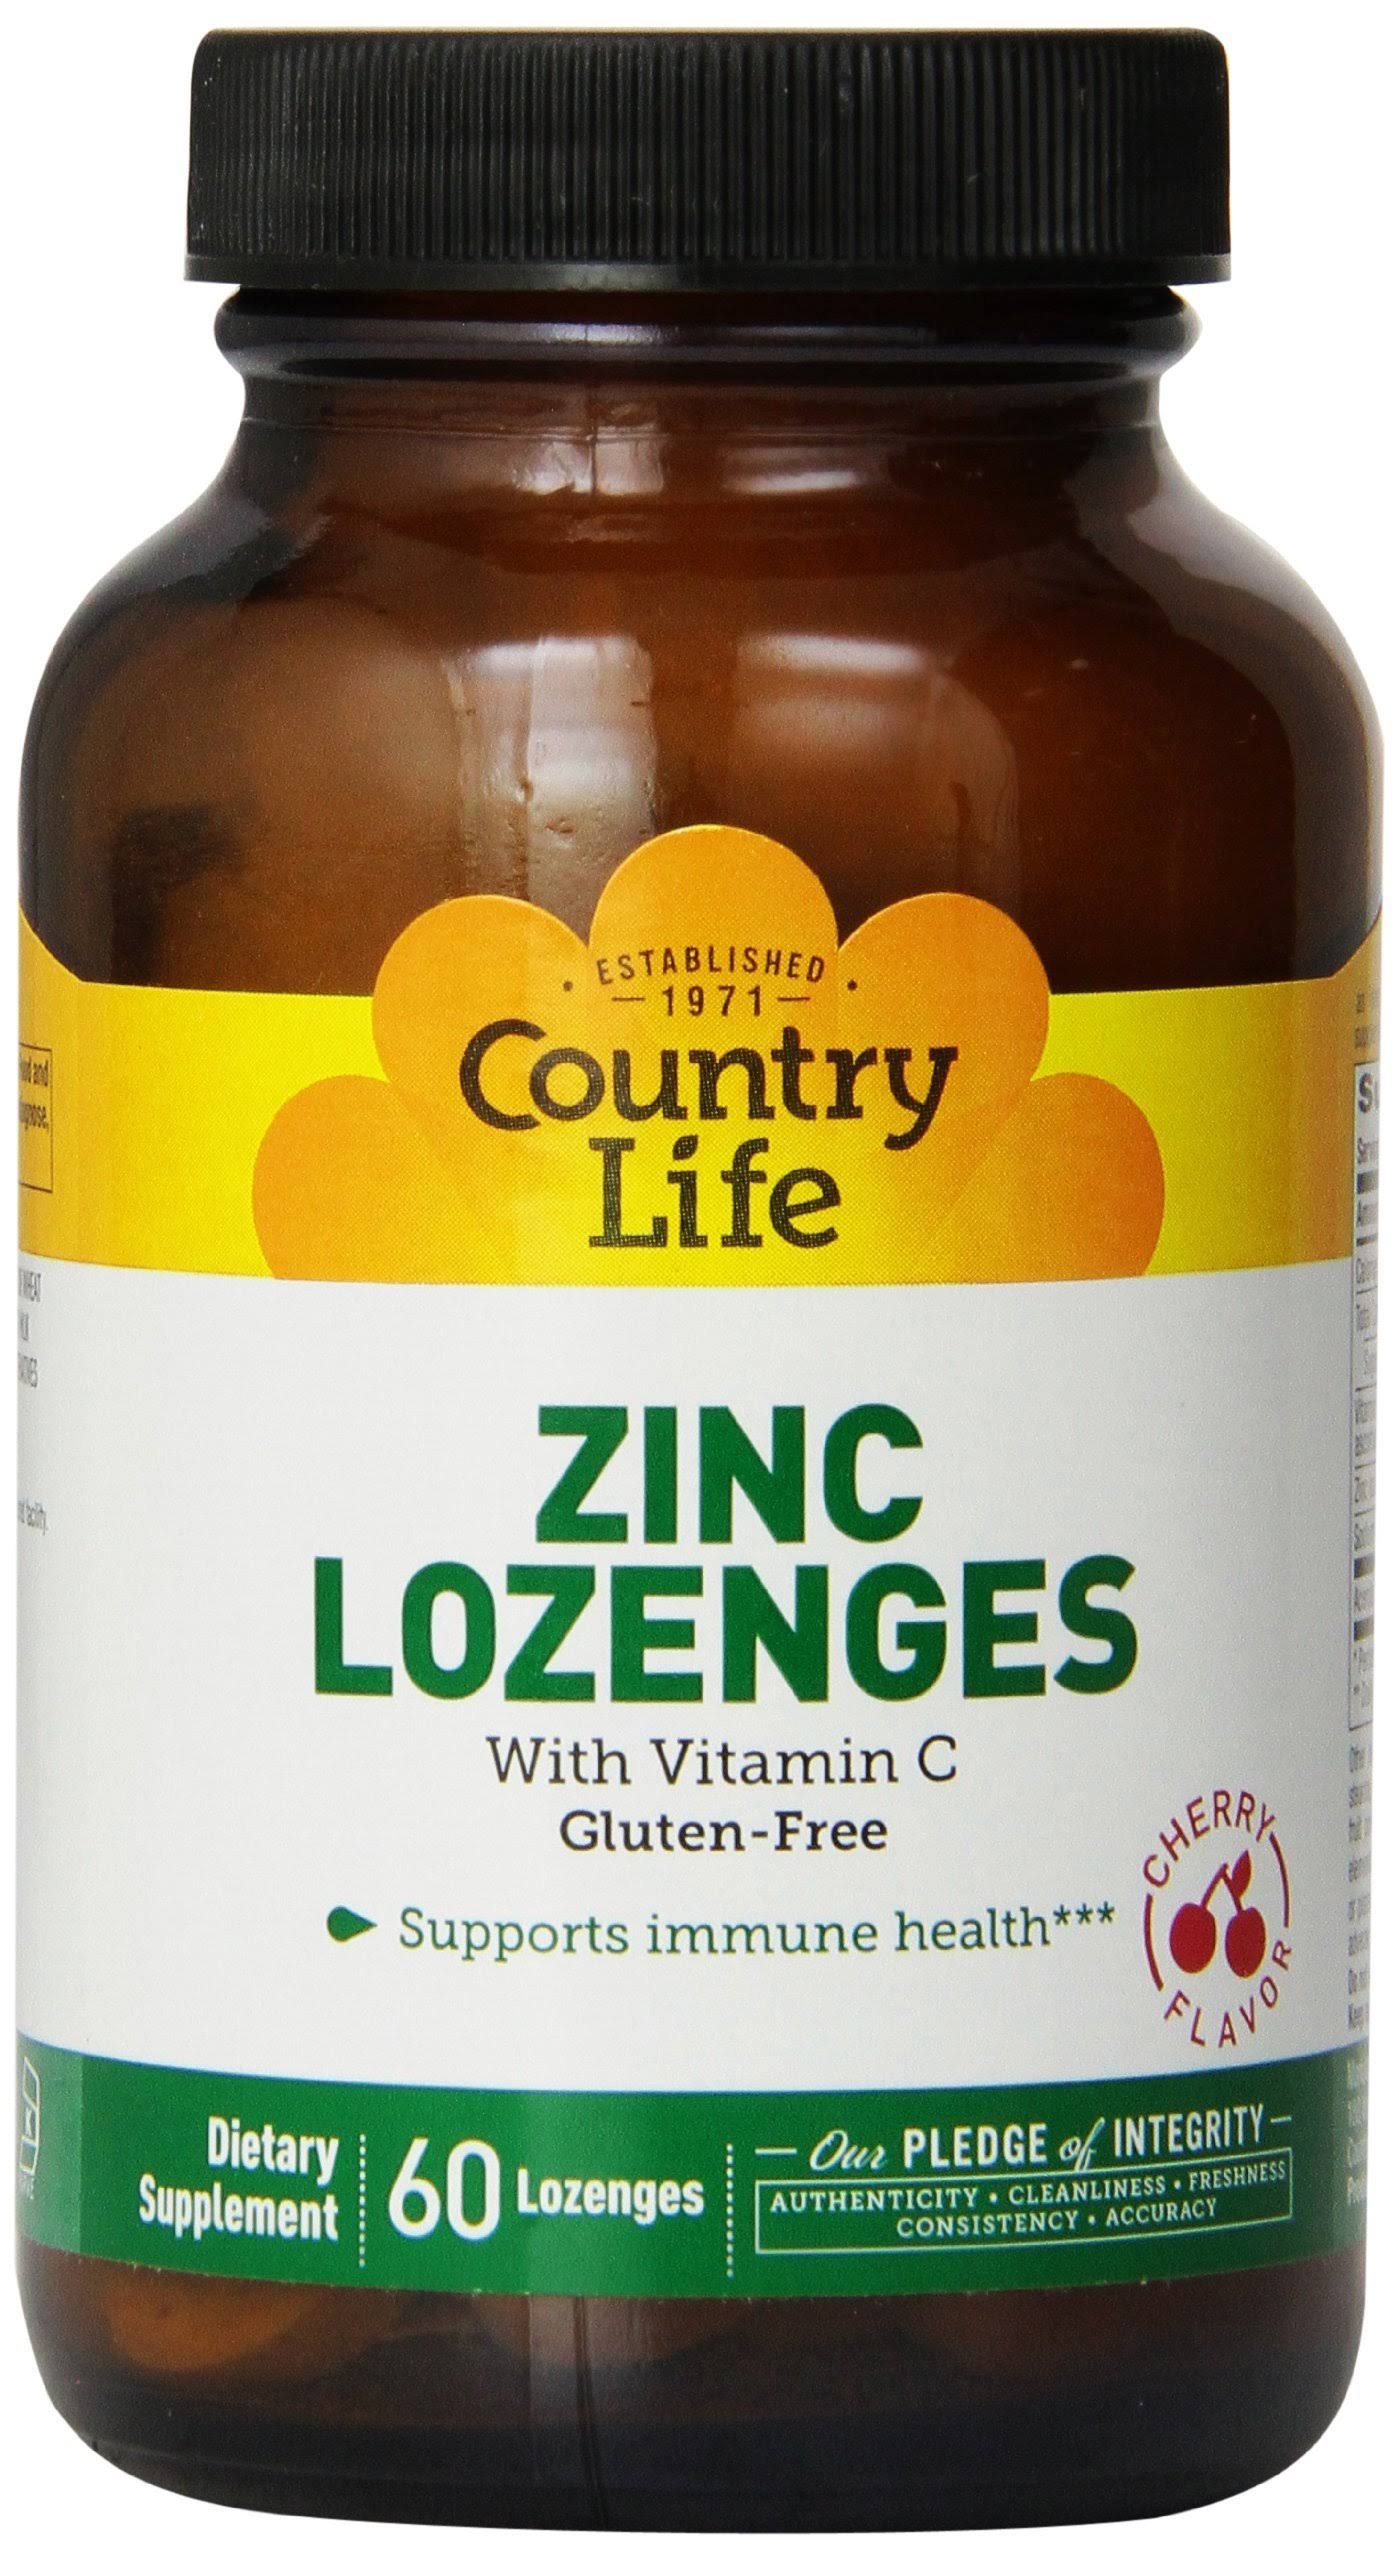 Country Life Zinc Lozenges - 60 Lozenges, Cherry